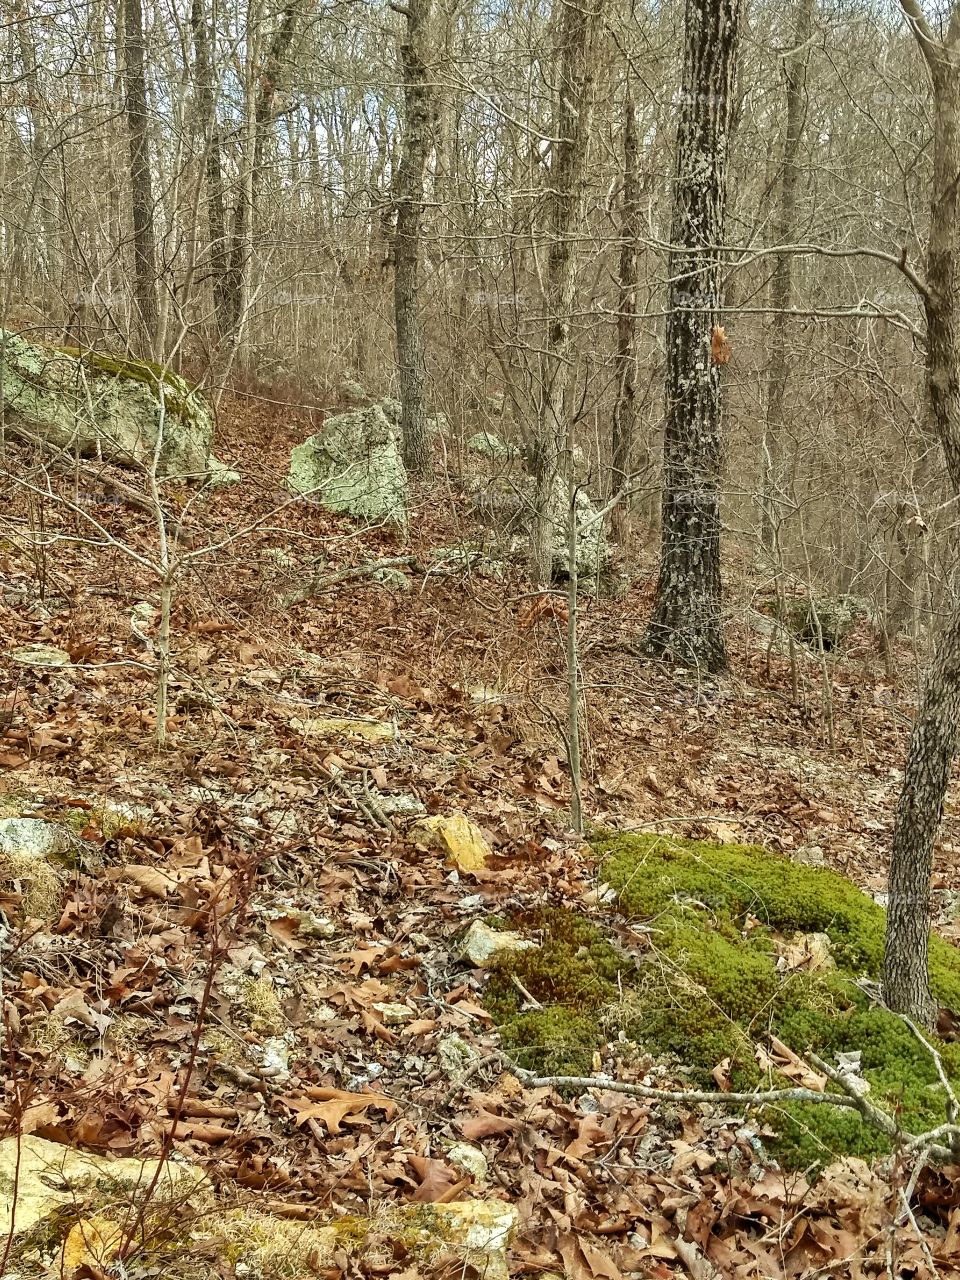 Green mossy rocks along hiking trail.